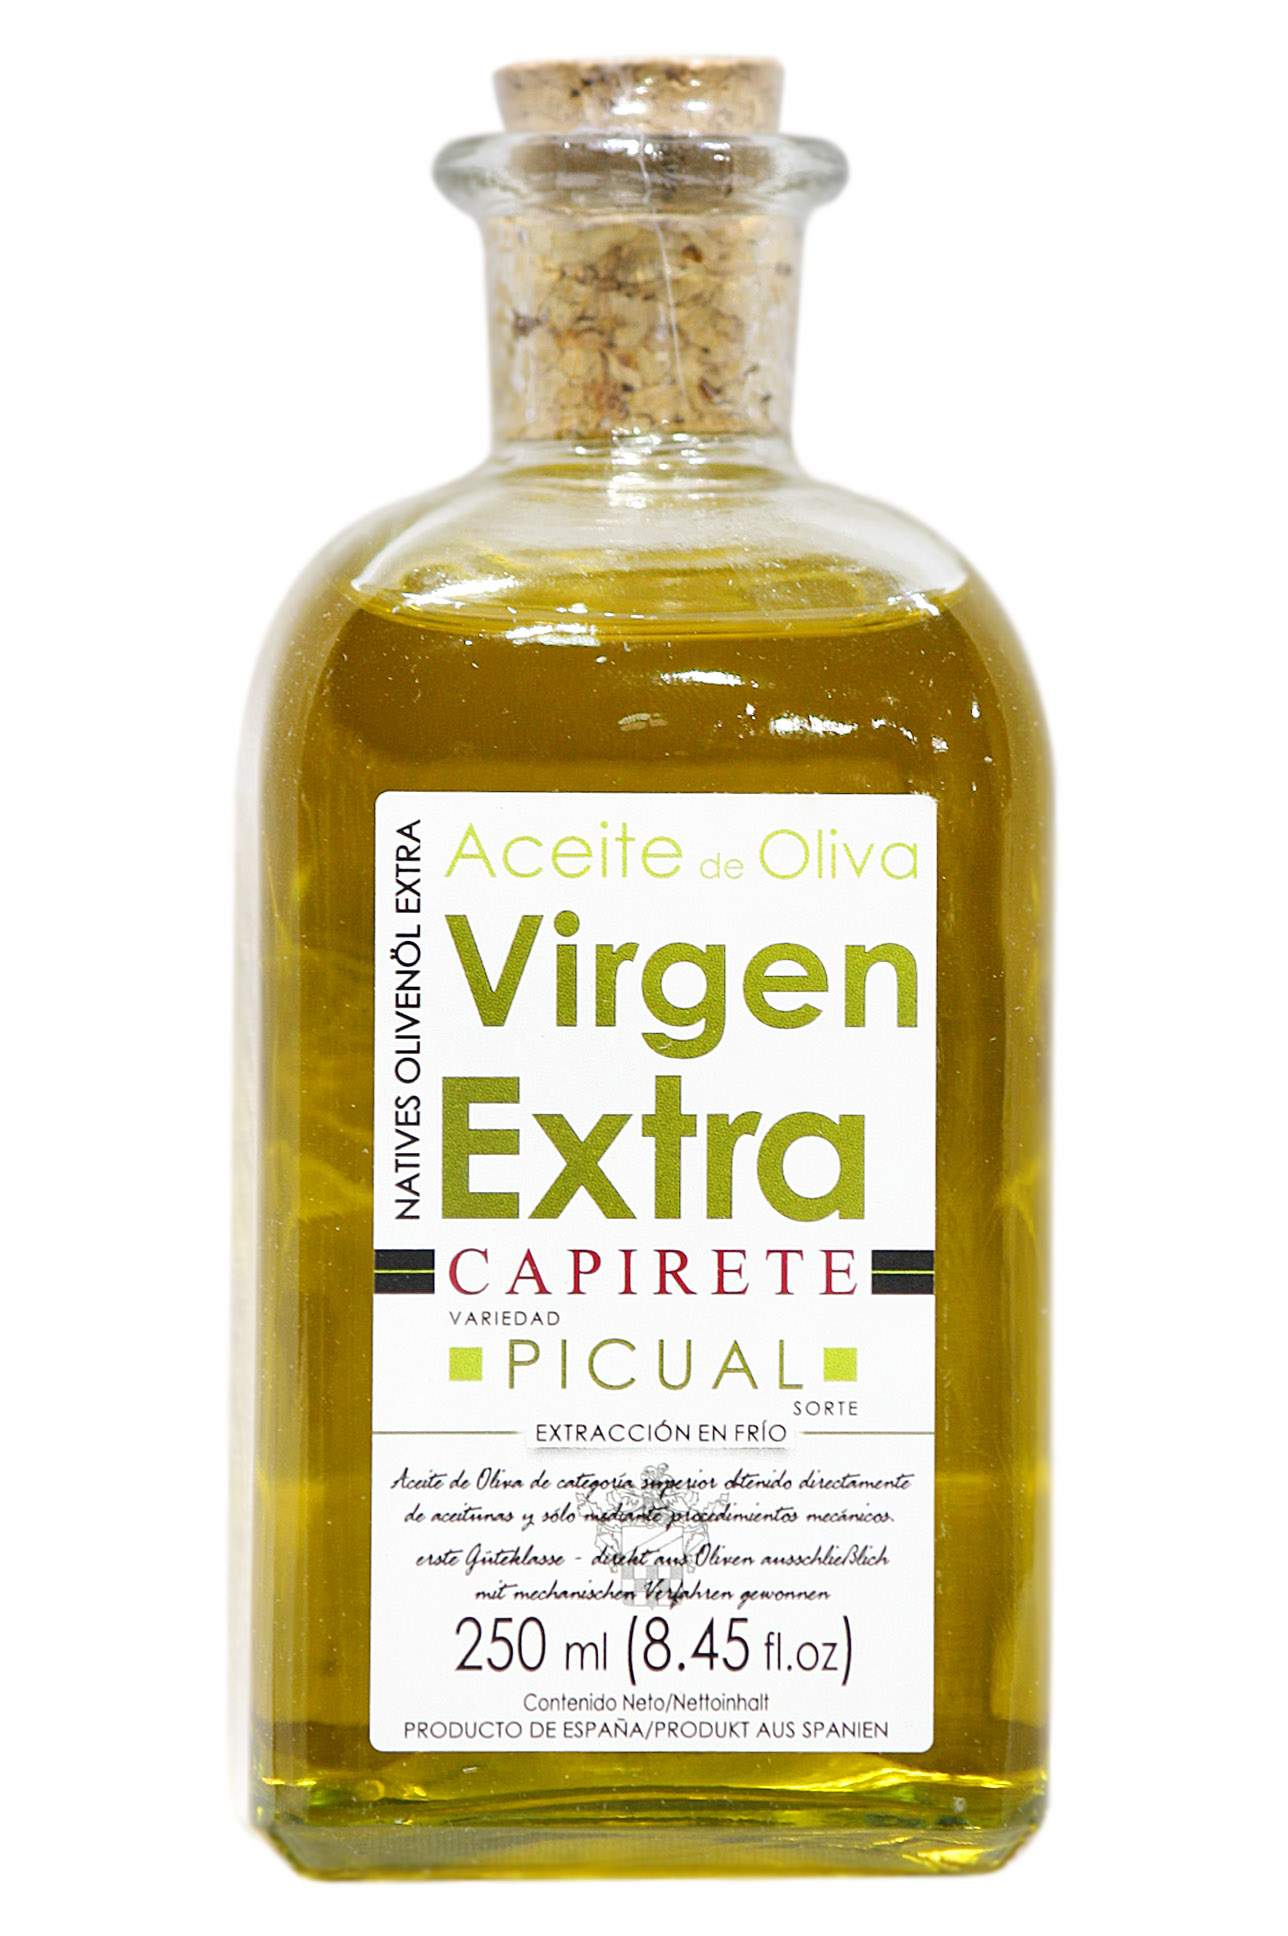 Capirete AV49-Extra olive oil Capirete